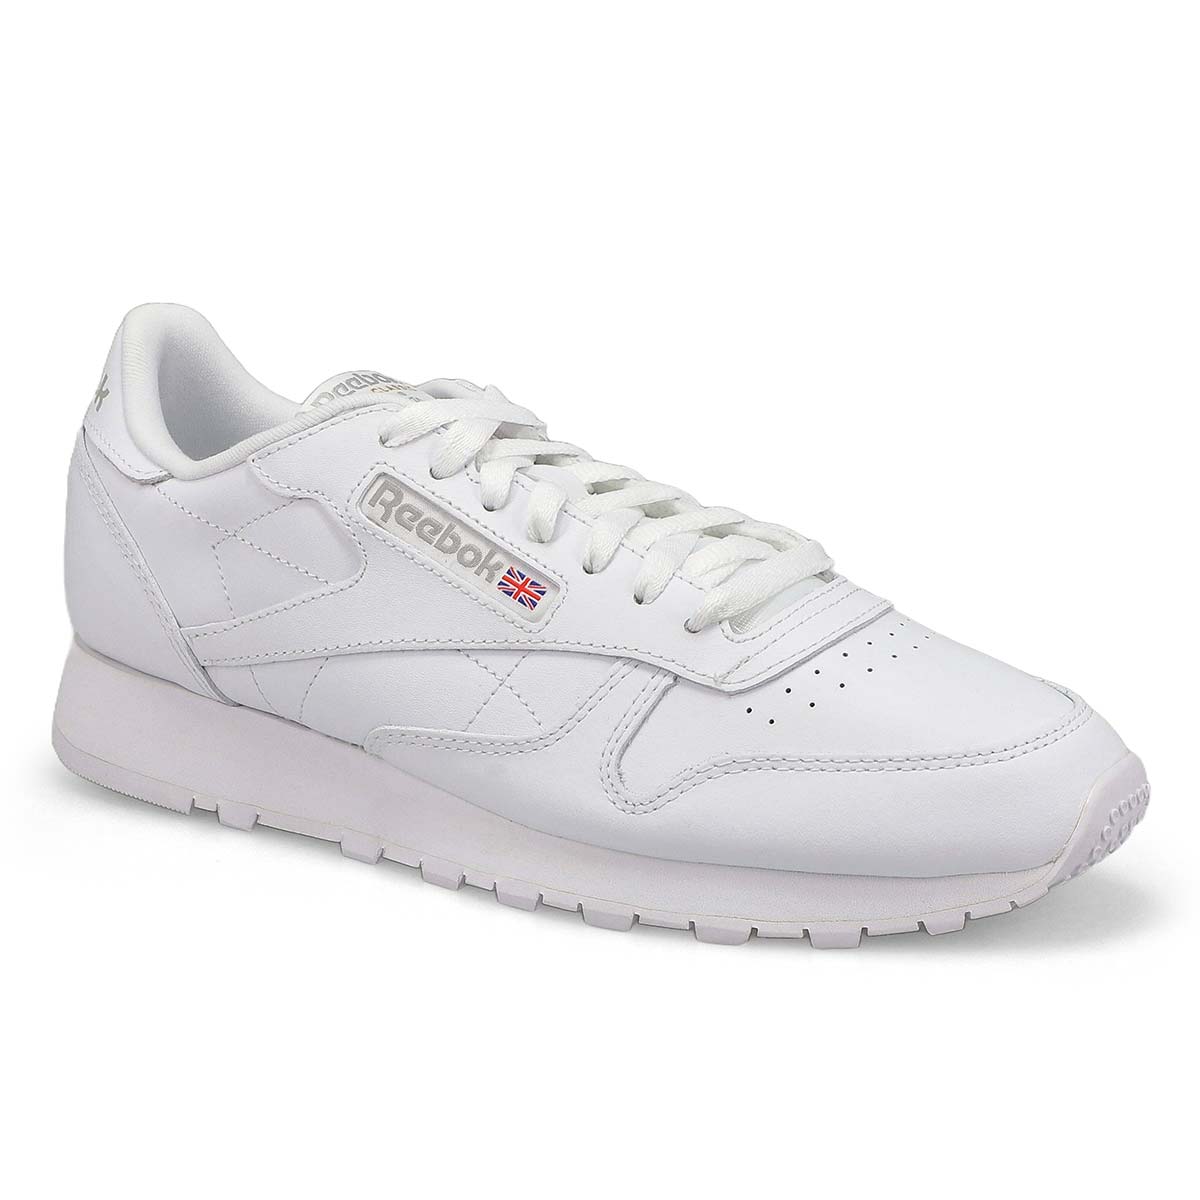 Men's Classic Leather Sneaker - White/ Grey